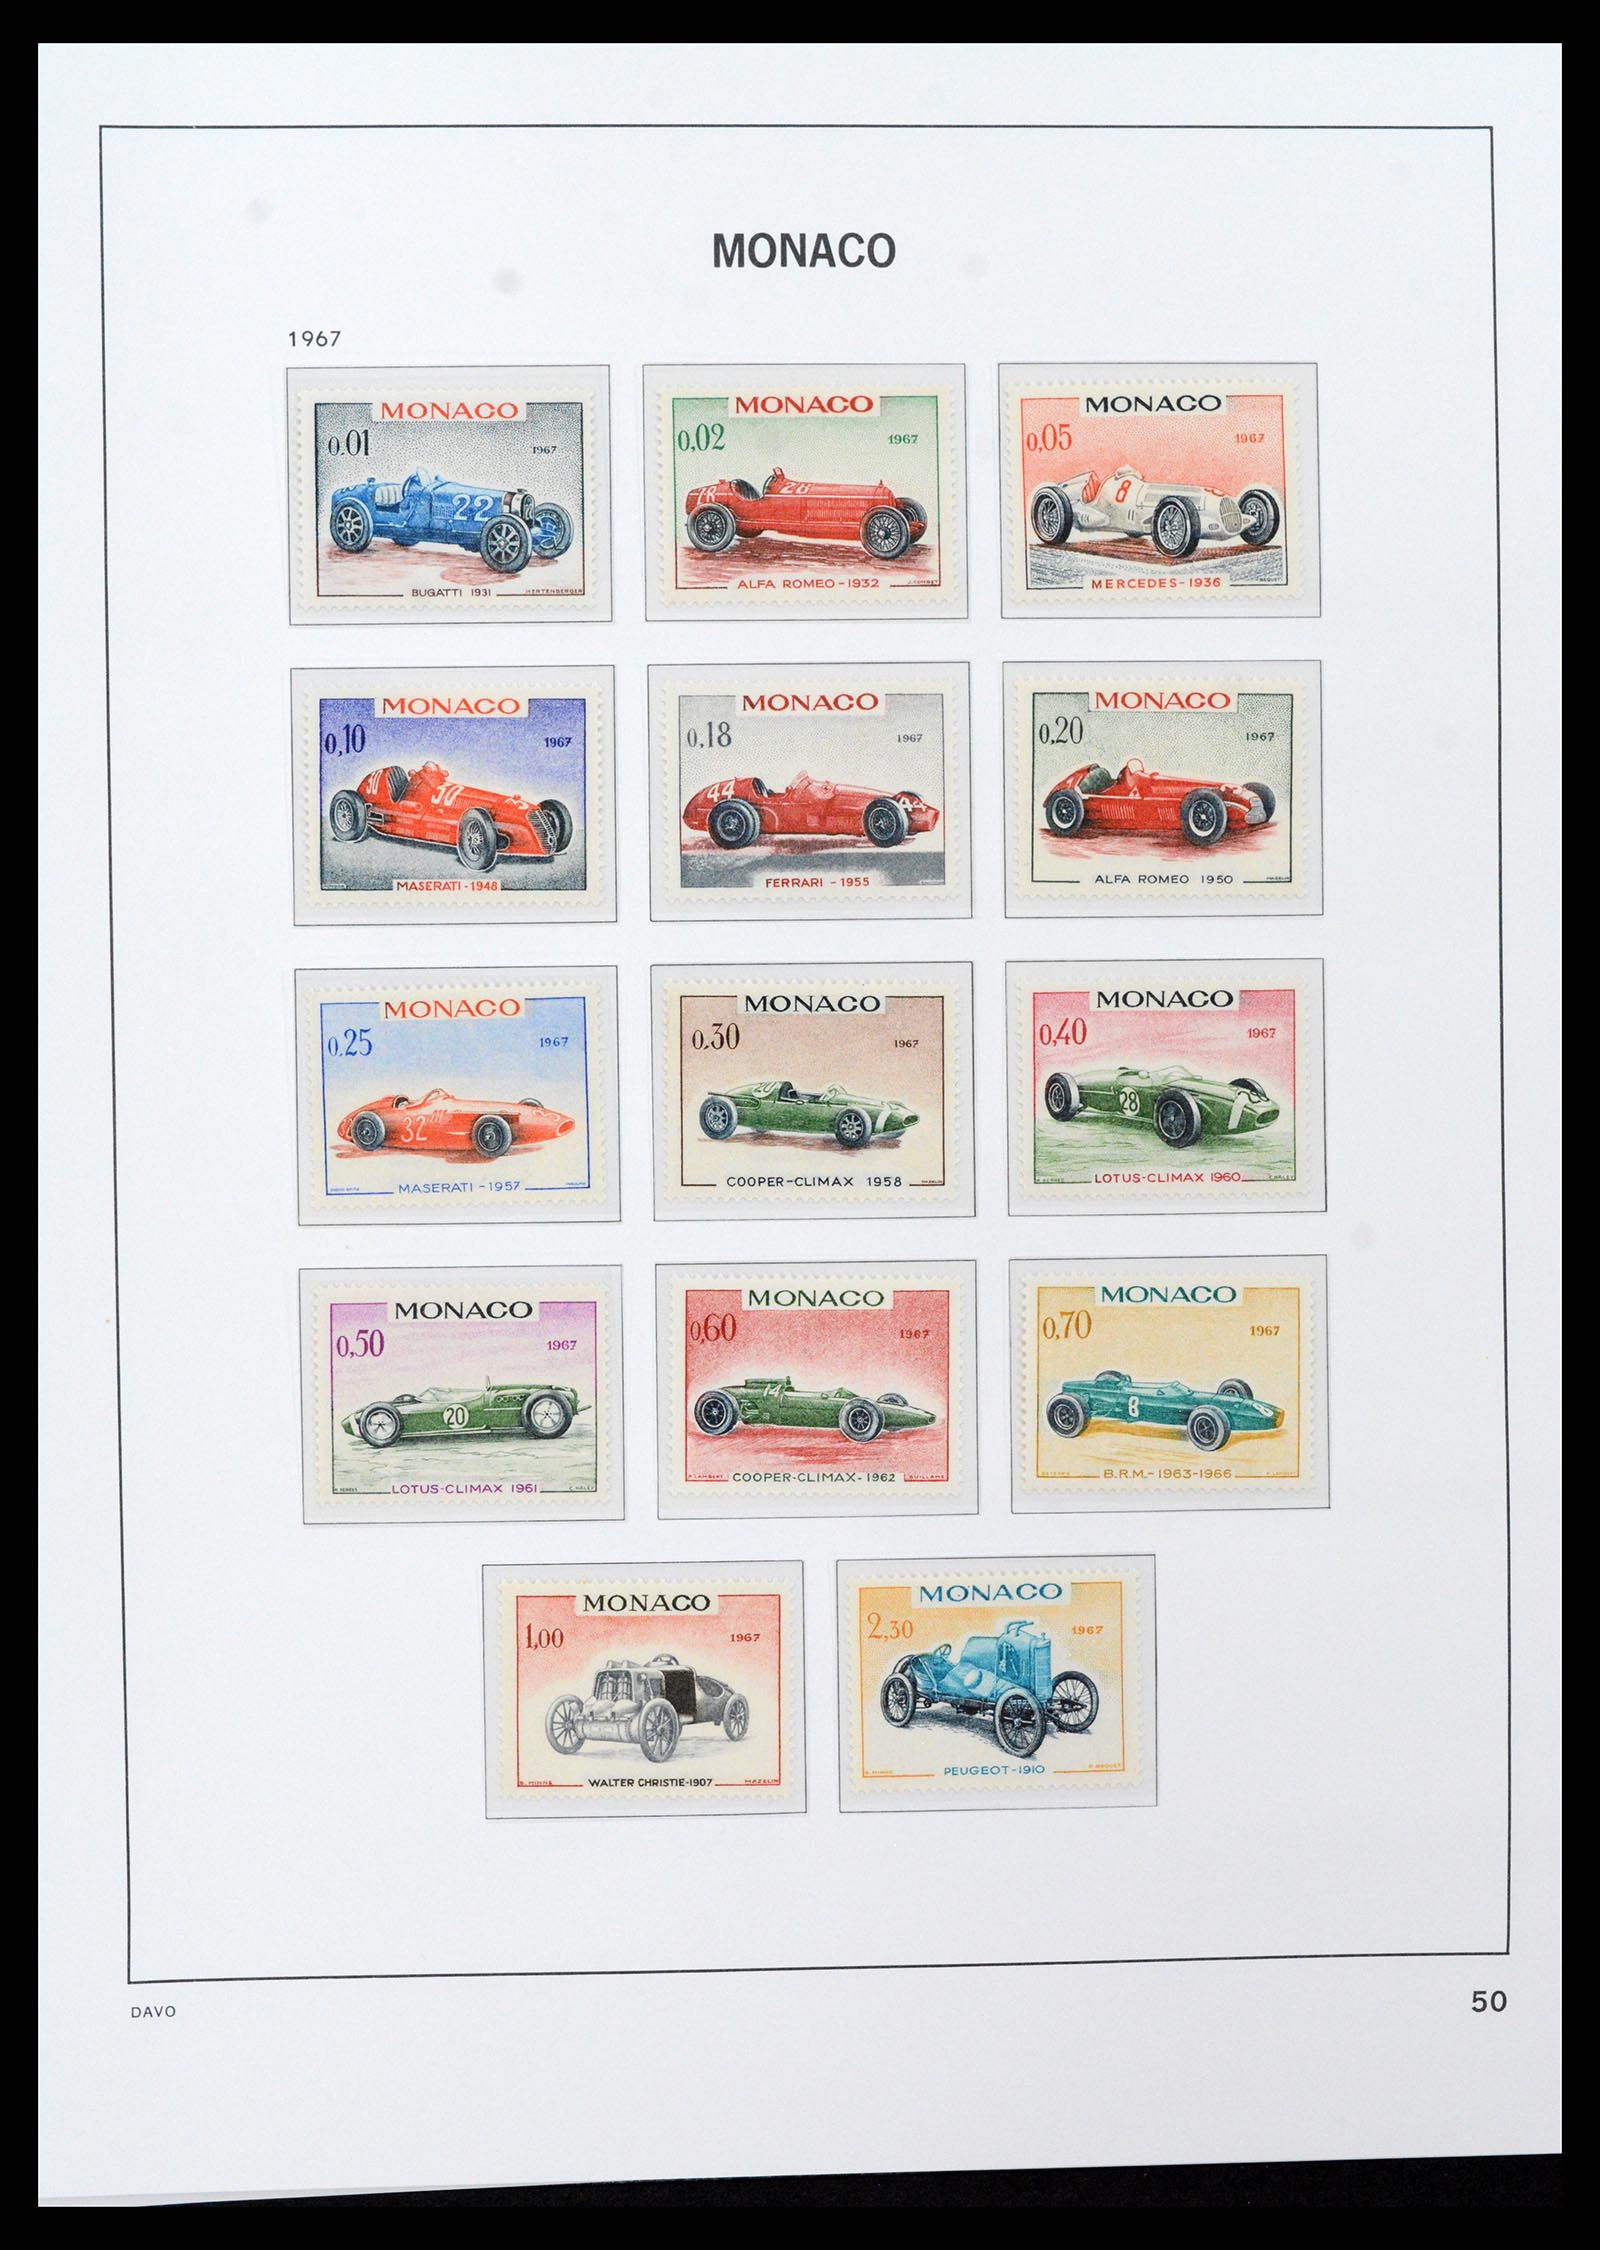 37279 050 - Stamp collection 37279 Monaco 1885-1969.